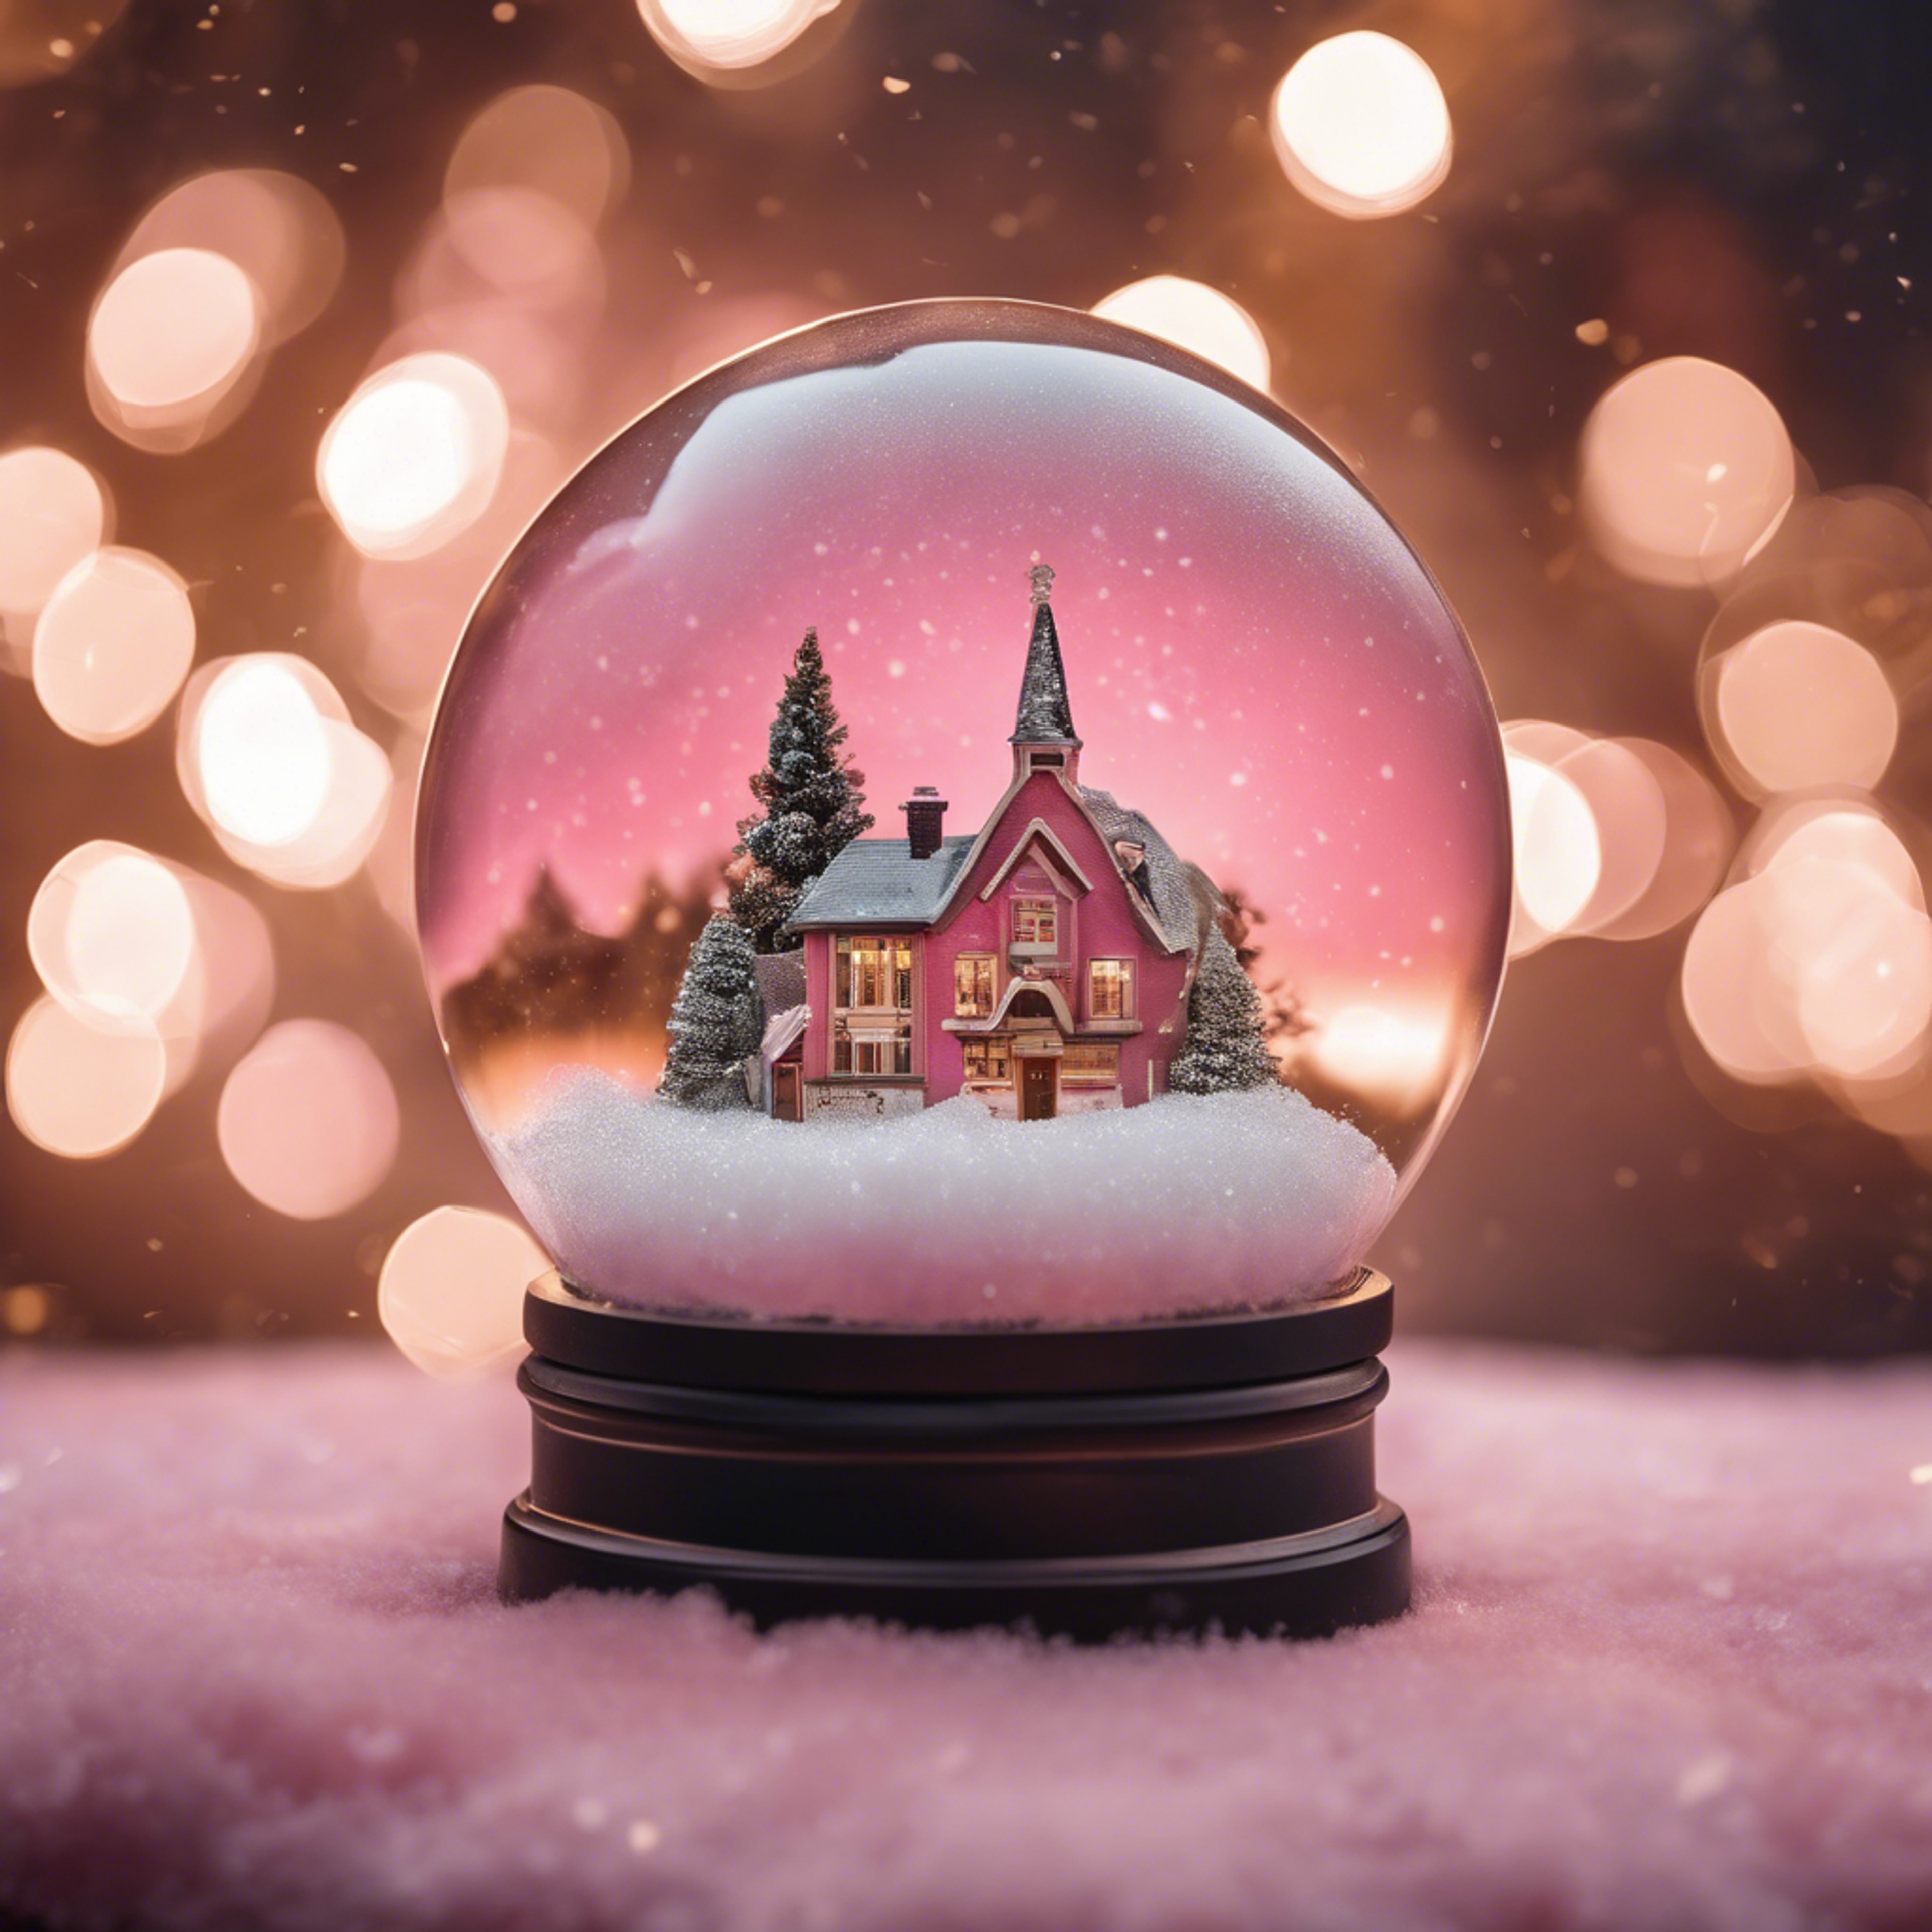 An enchanting snow globe revealing a quaint town under a pink Christmas sky. Tapéta[a24ac541fe61415897f7]